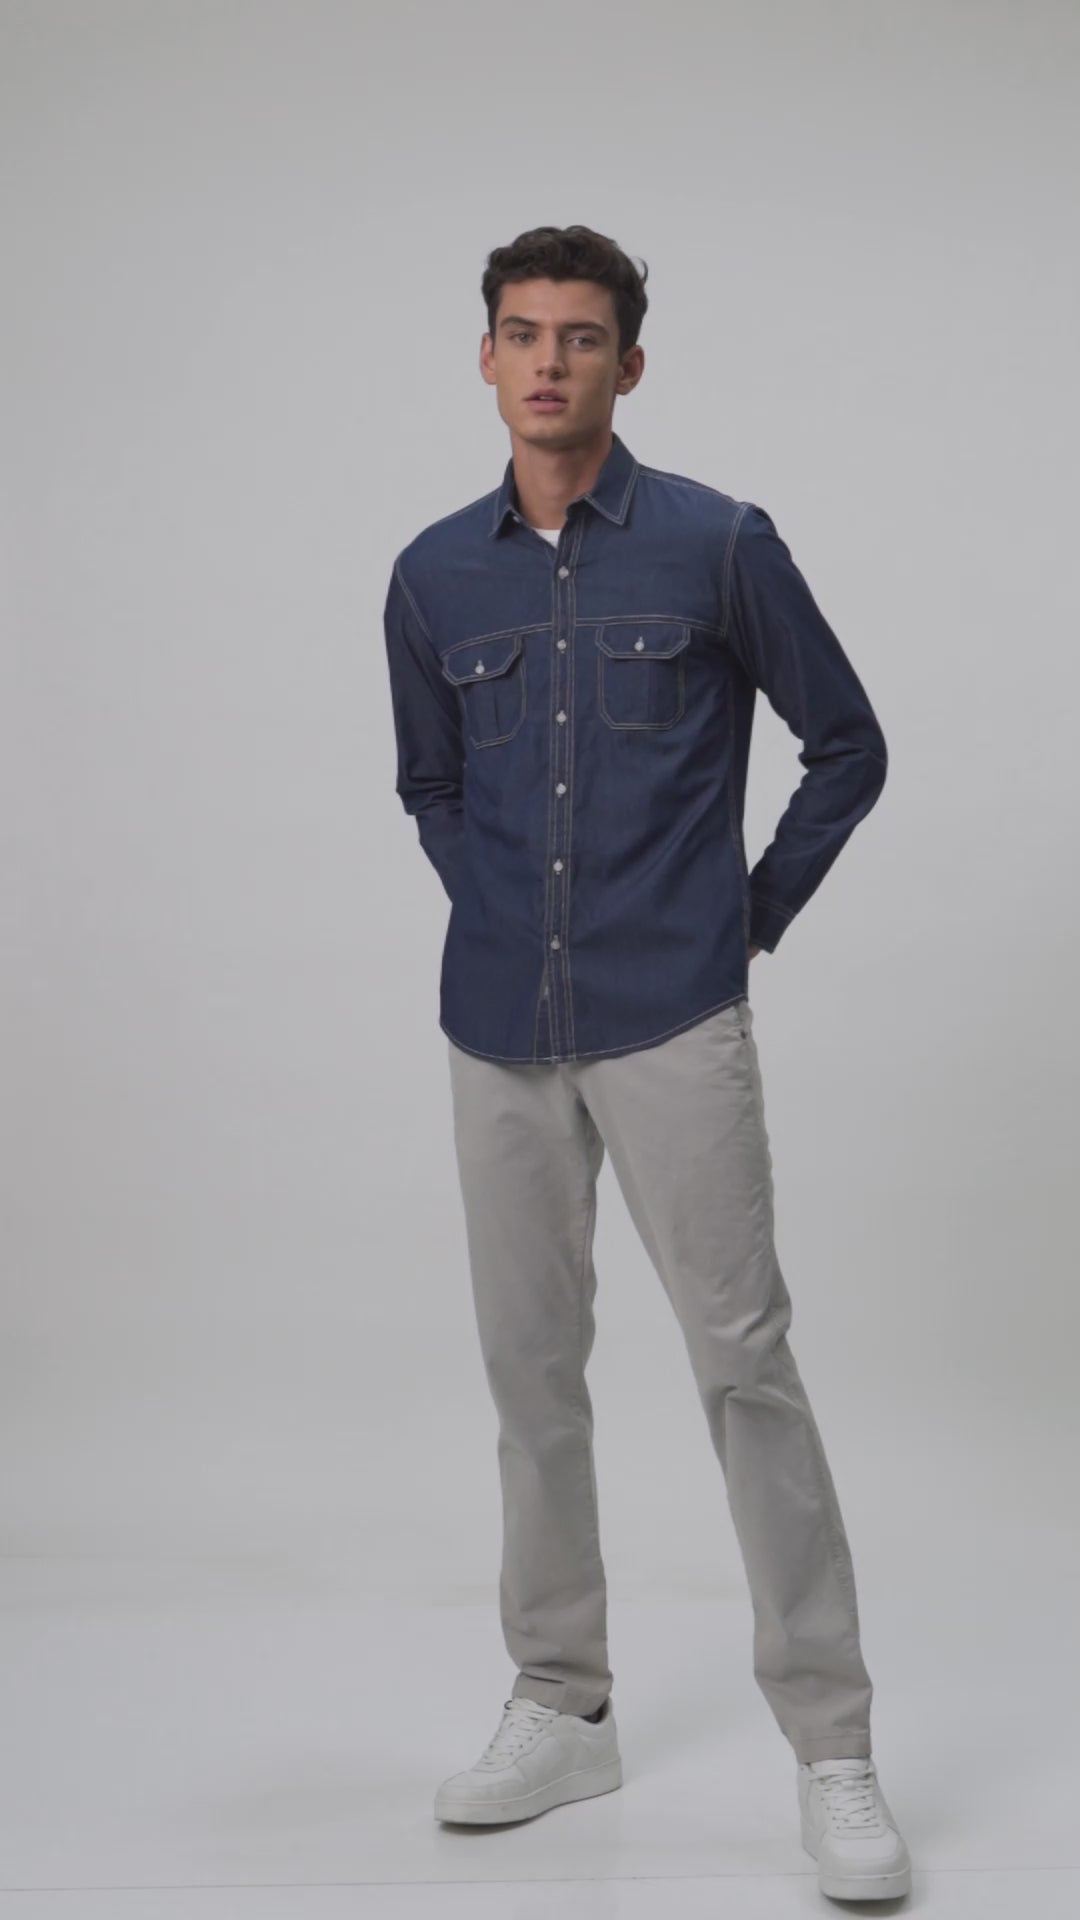 Distressed Denim Woven Top - Medium Wash Jean Jacket Men's Denim Shirt -  China Men's Denim Shirt and Apparel price | Made-in-China.com